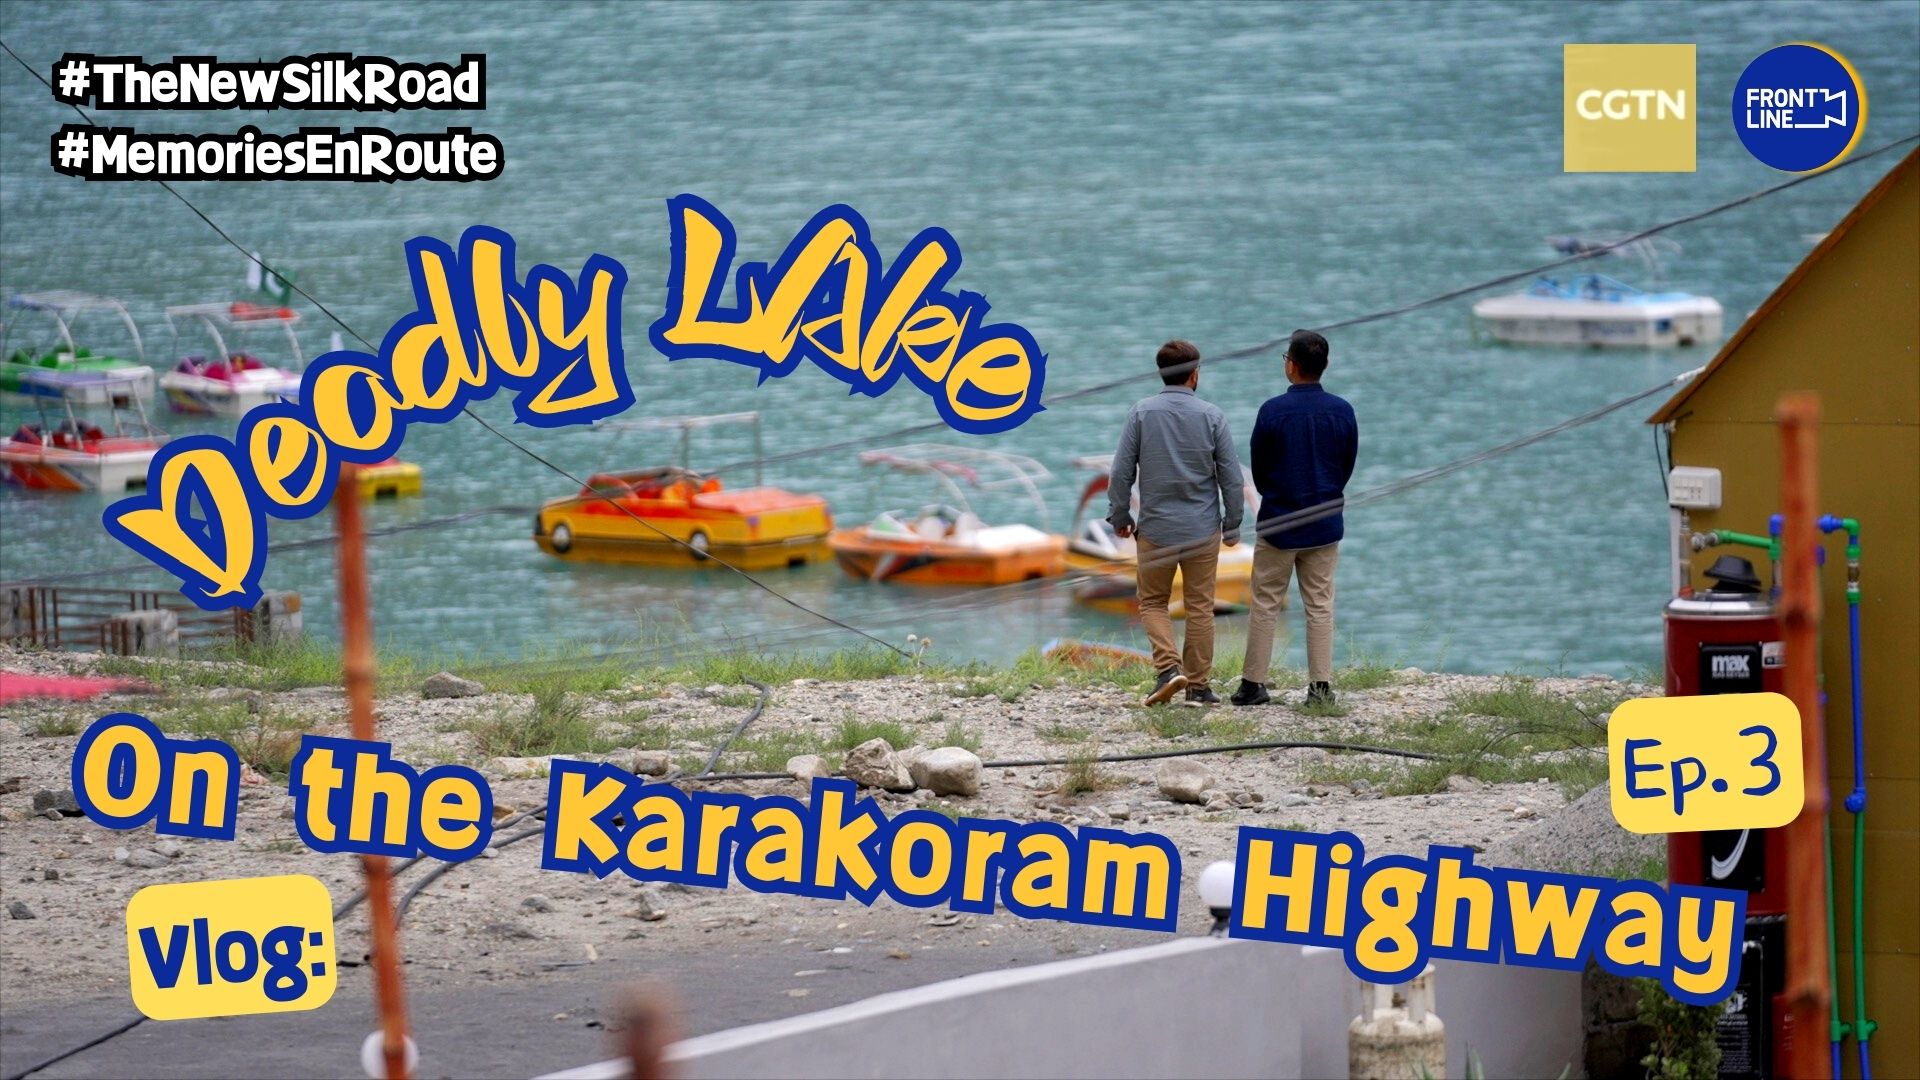 This deadly lake wasn't here before 2010! Karakoram Highway pt.3